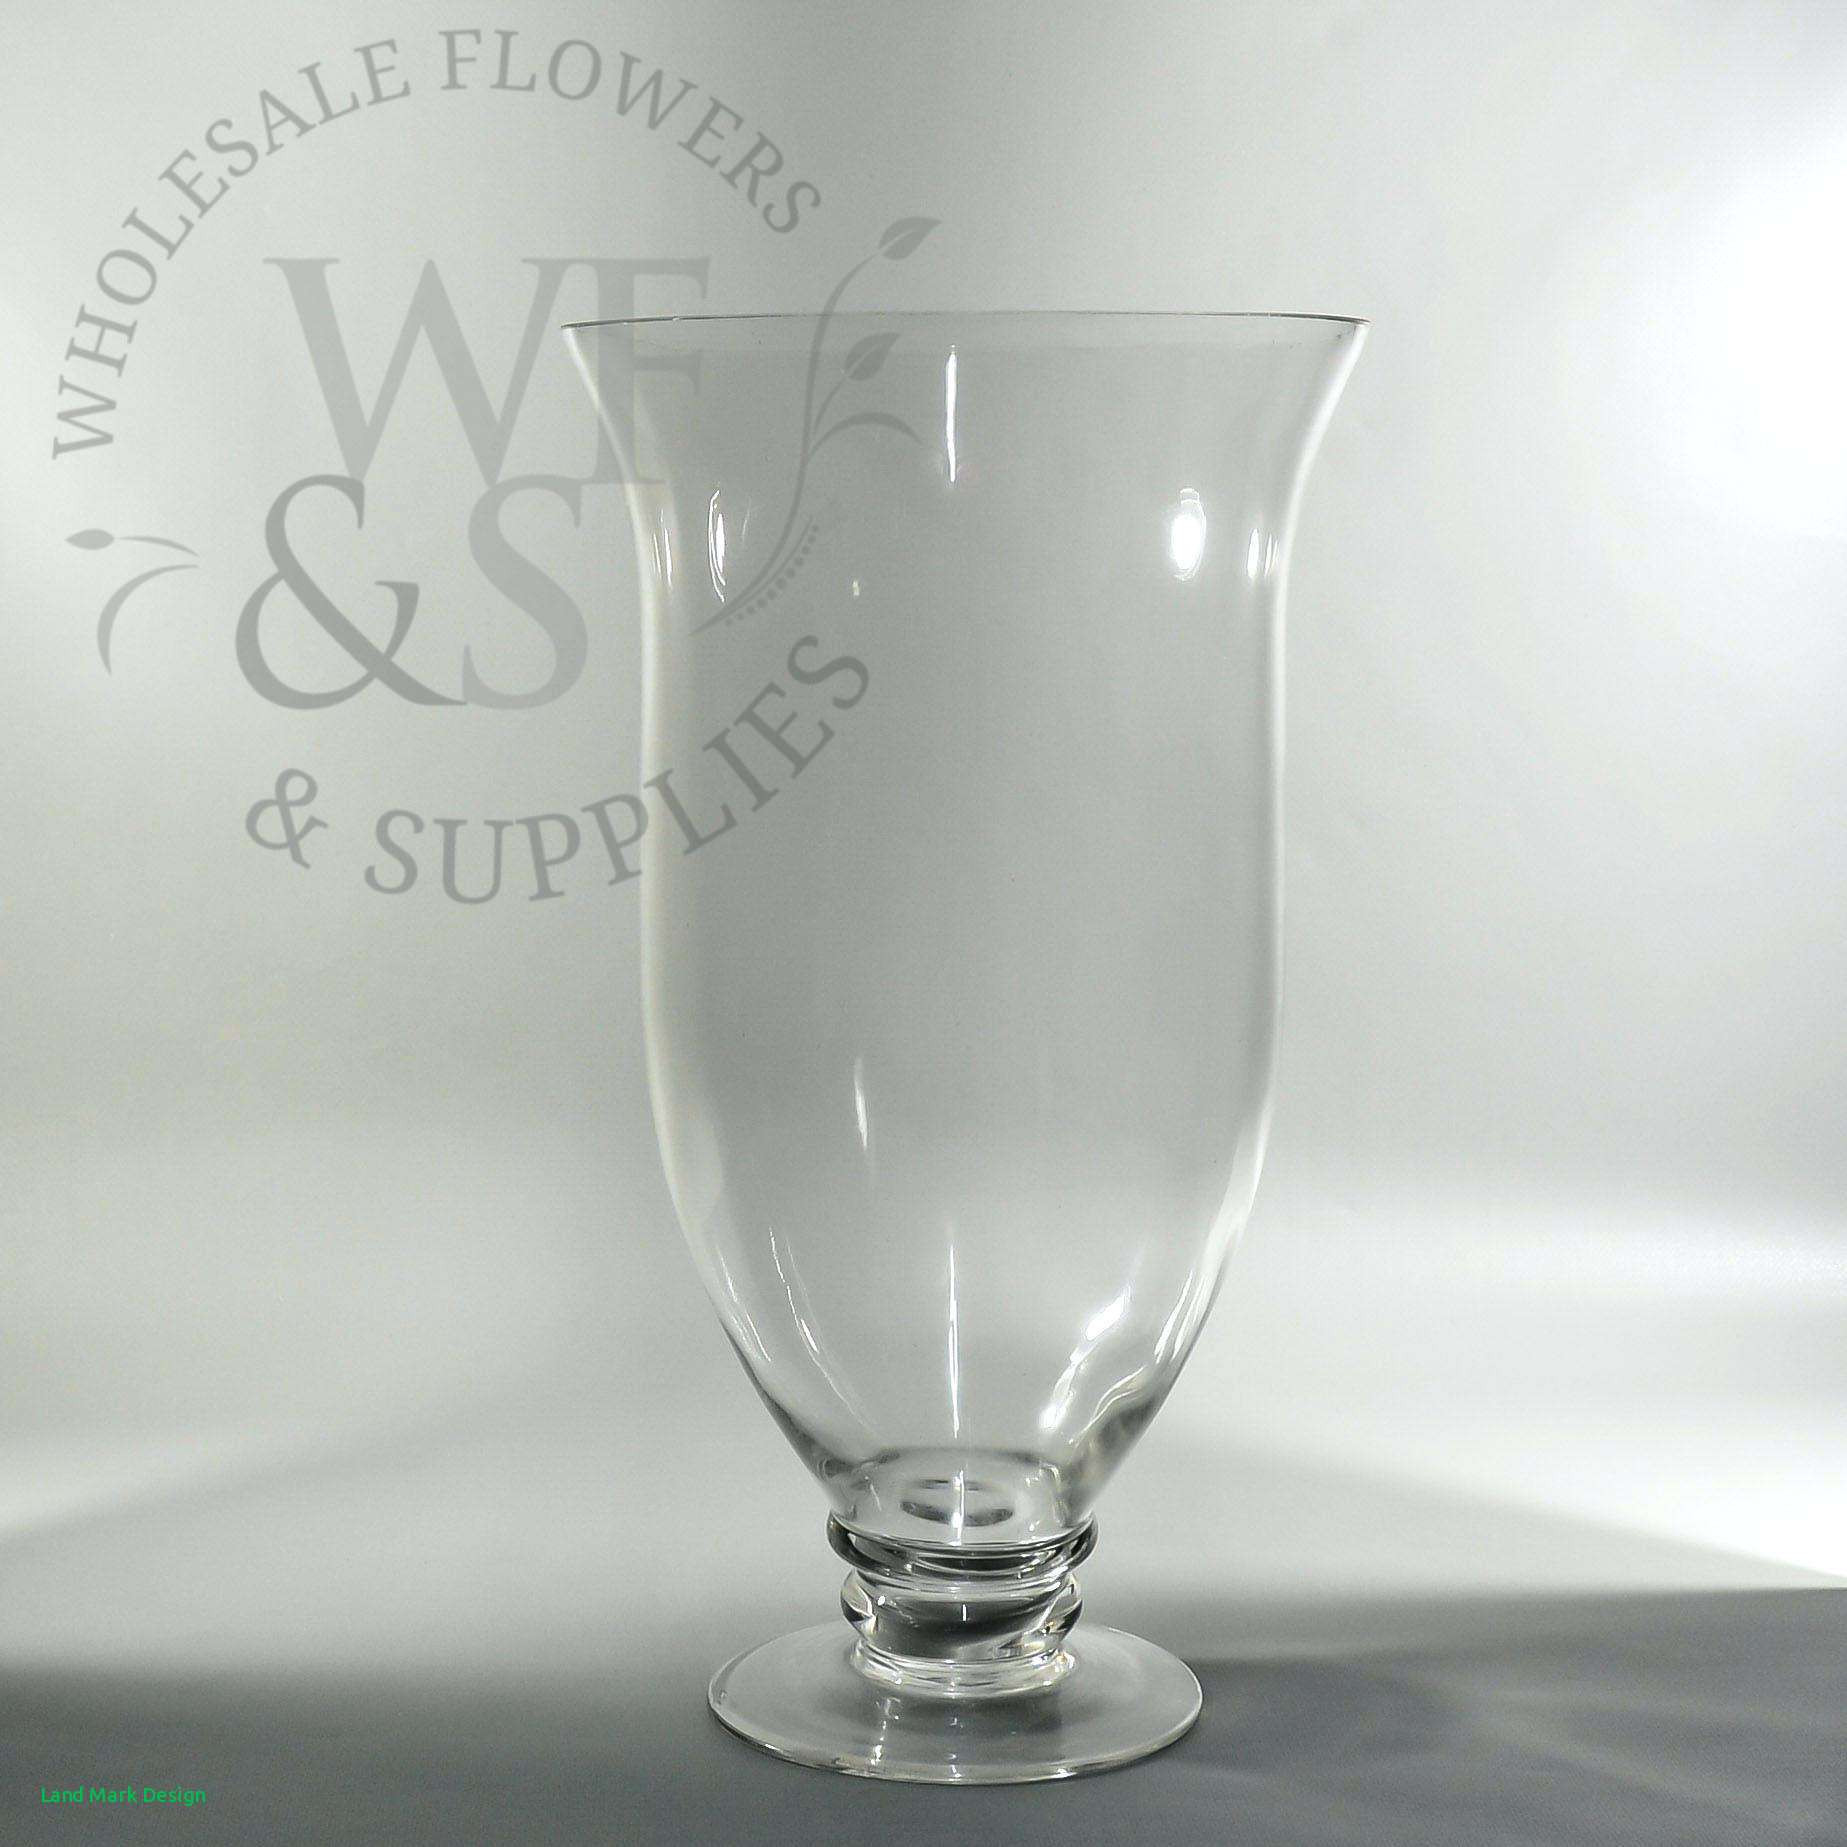 Large Bohemian Crystal Vase Of Large Glass Vases Image Glass Vase Ideas Design Vases Artificial Pertaining to Large Glass Vases Image Glass Vase Ideas Design Of Large Glass Vases Image Glass Vase Ideas